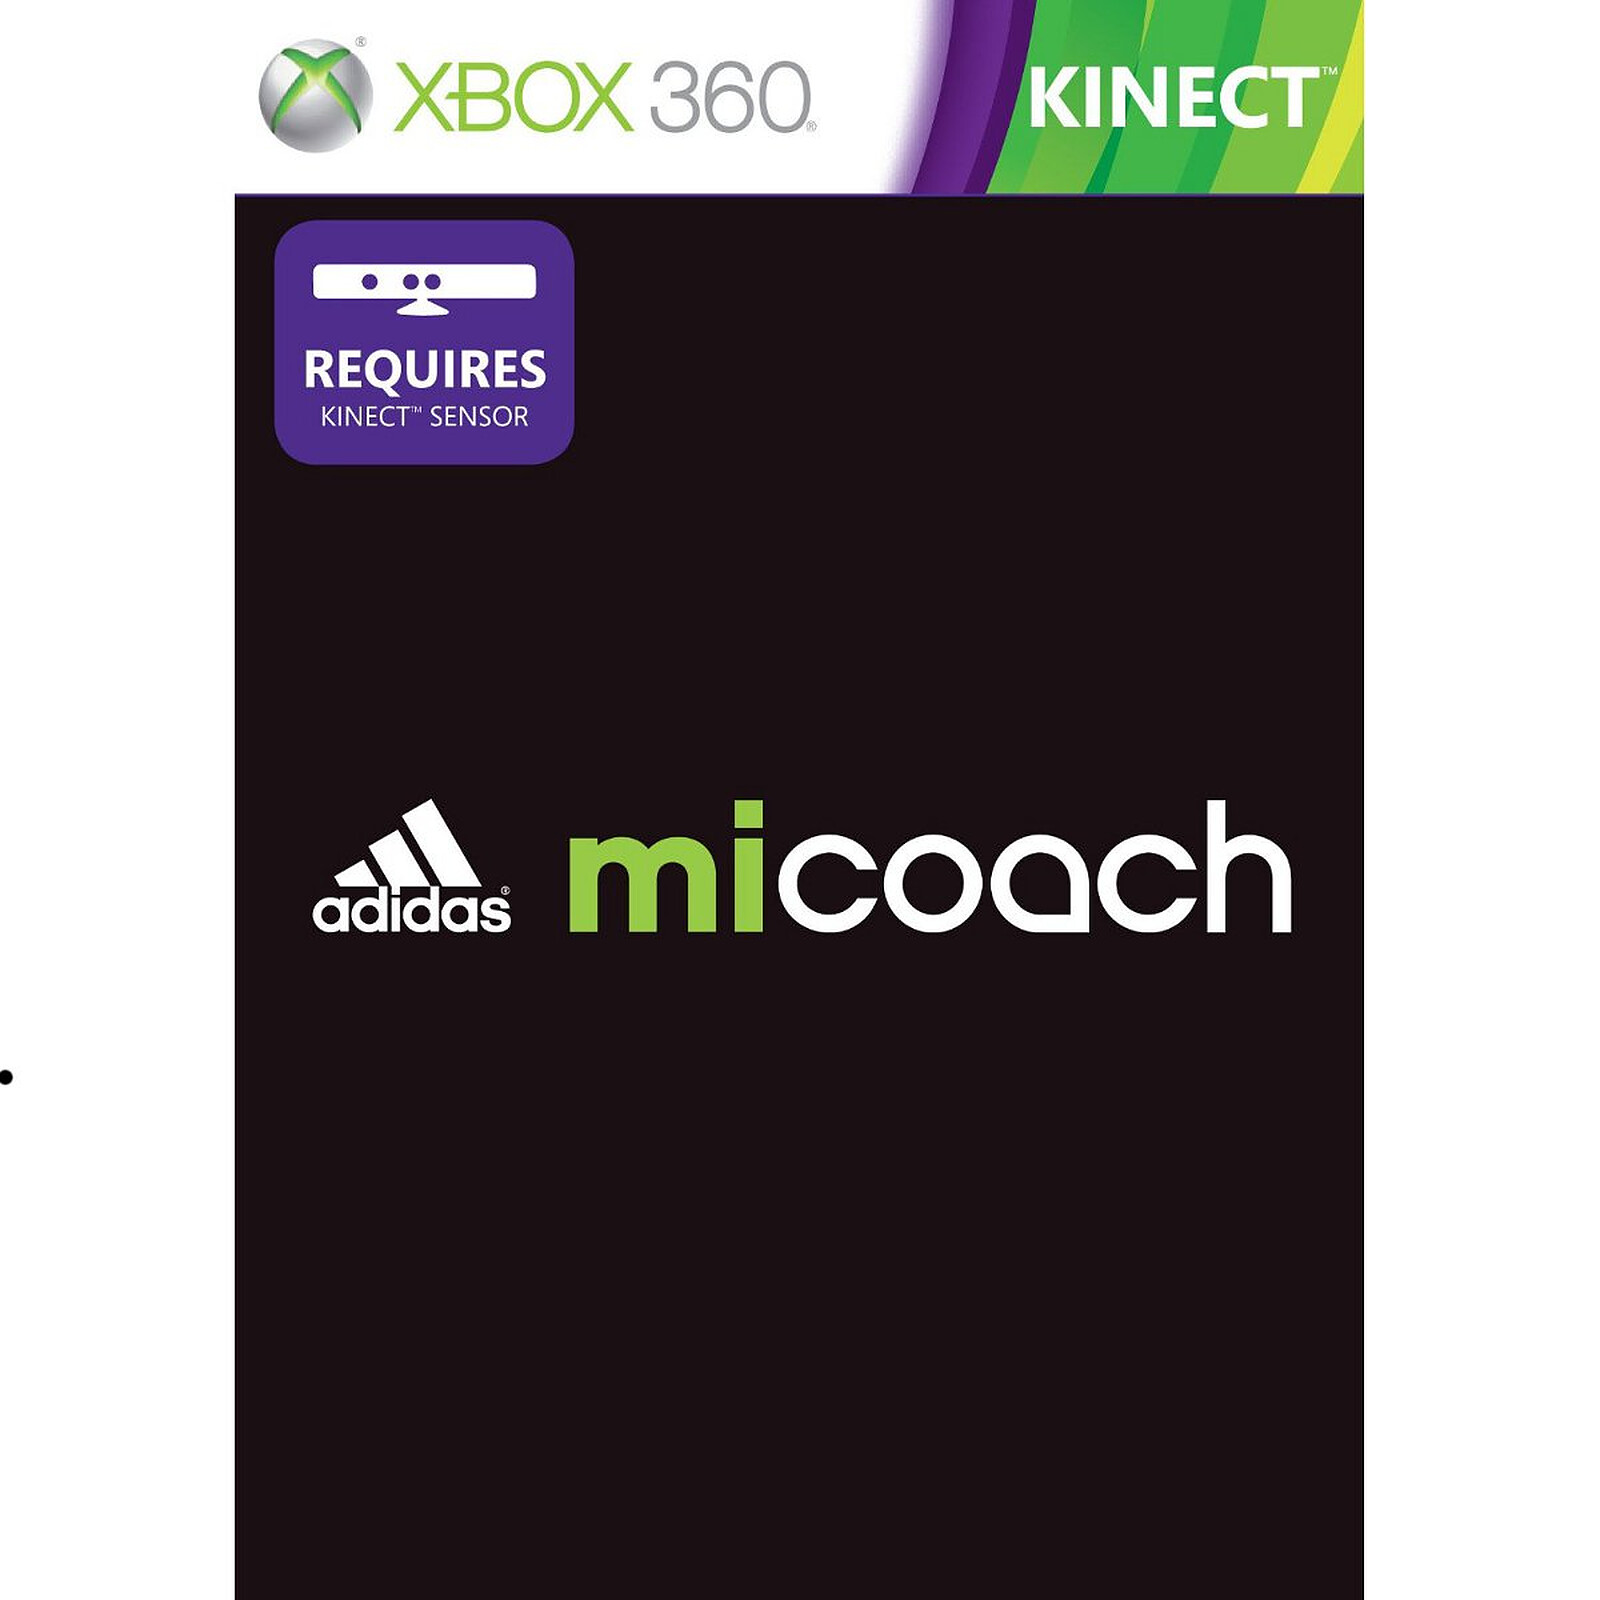 adidas micoach xbox 360